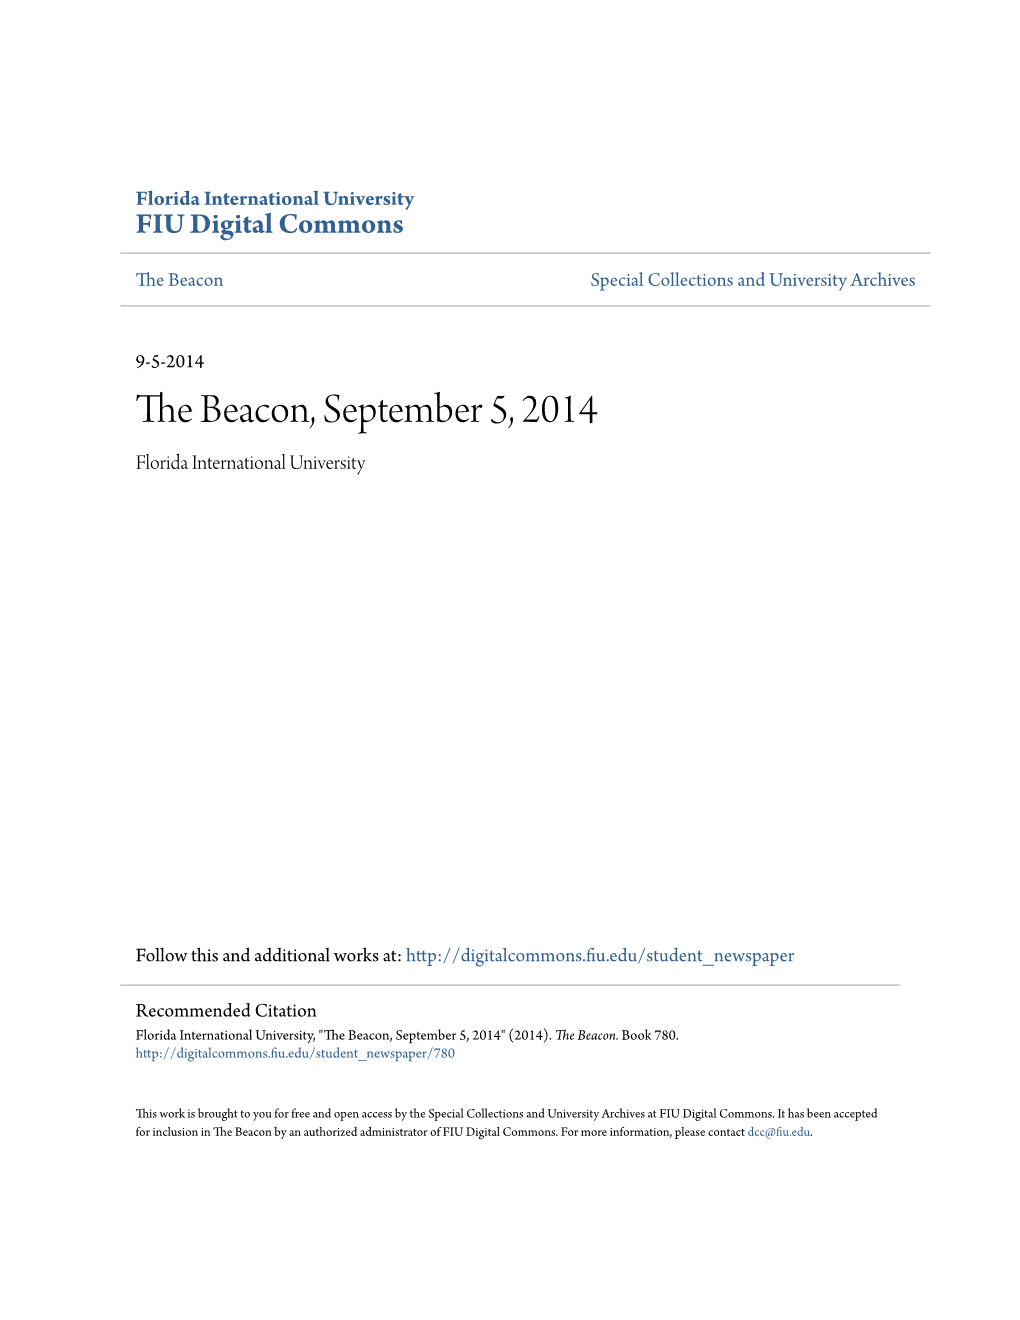 The Beacon, September 5, 2014 Florida International University